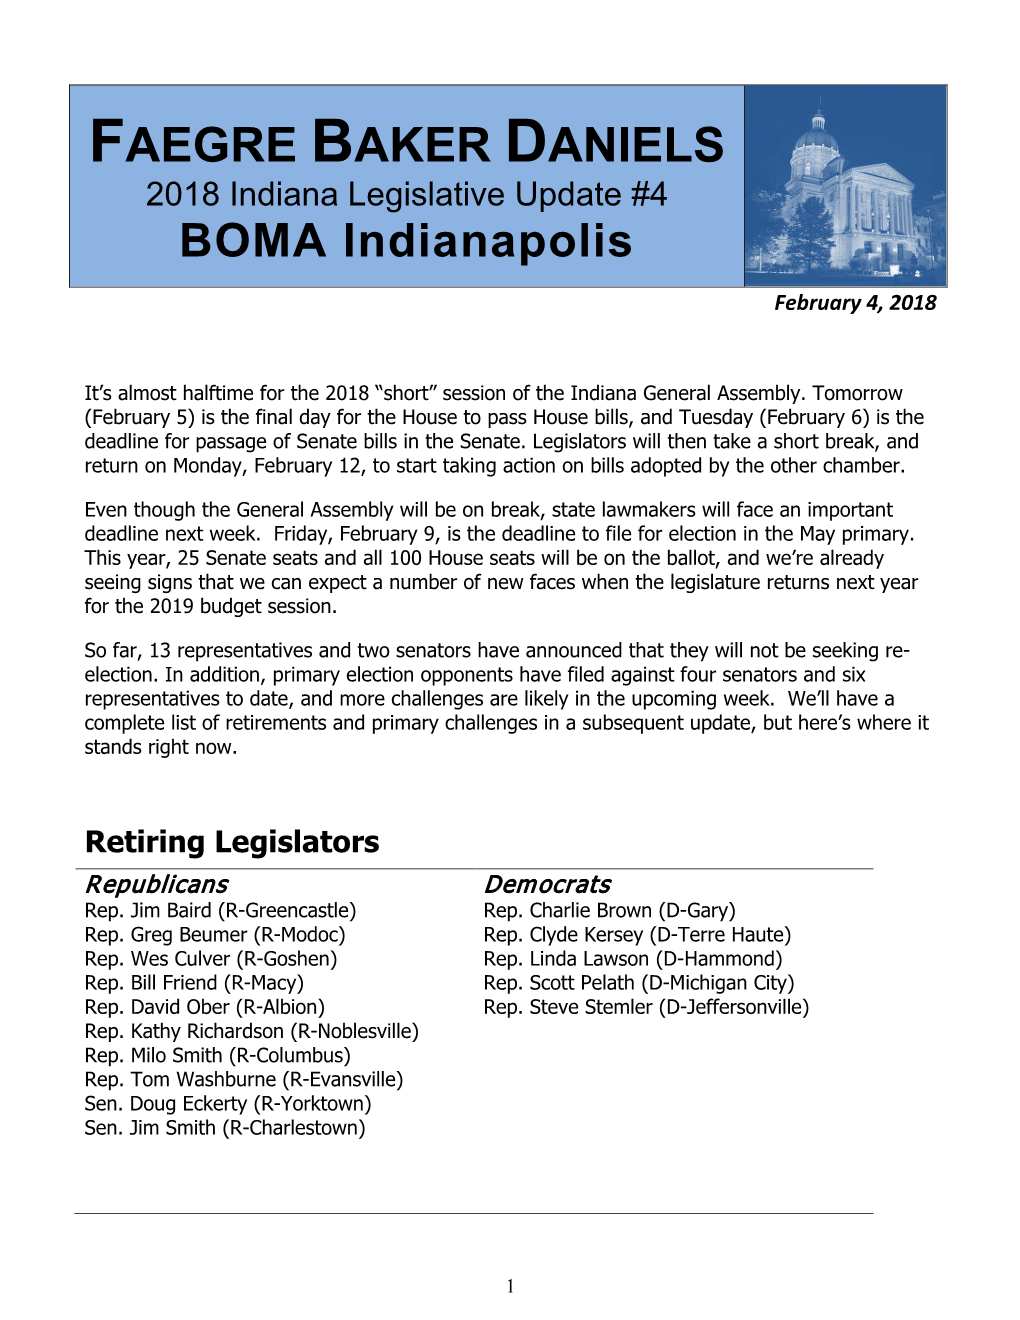 FAEGRE BAKER DANIELS 2018 Indiana Legislative Update #4 BOMA Indianapolis